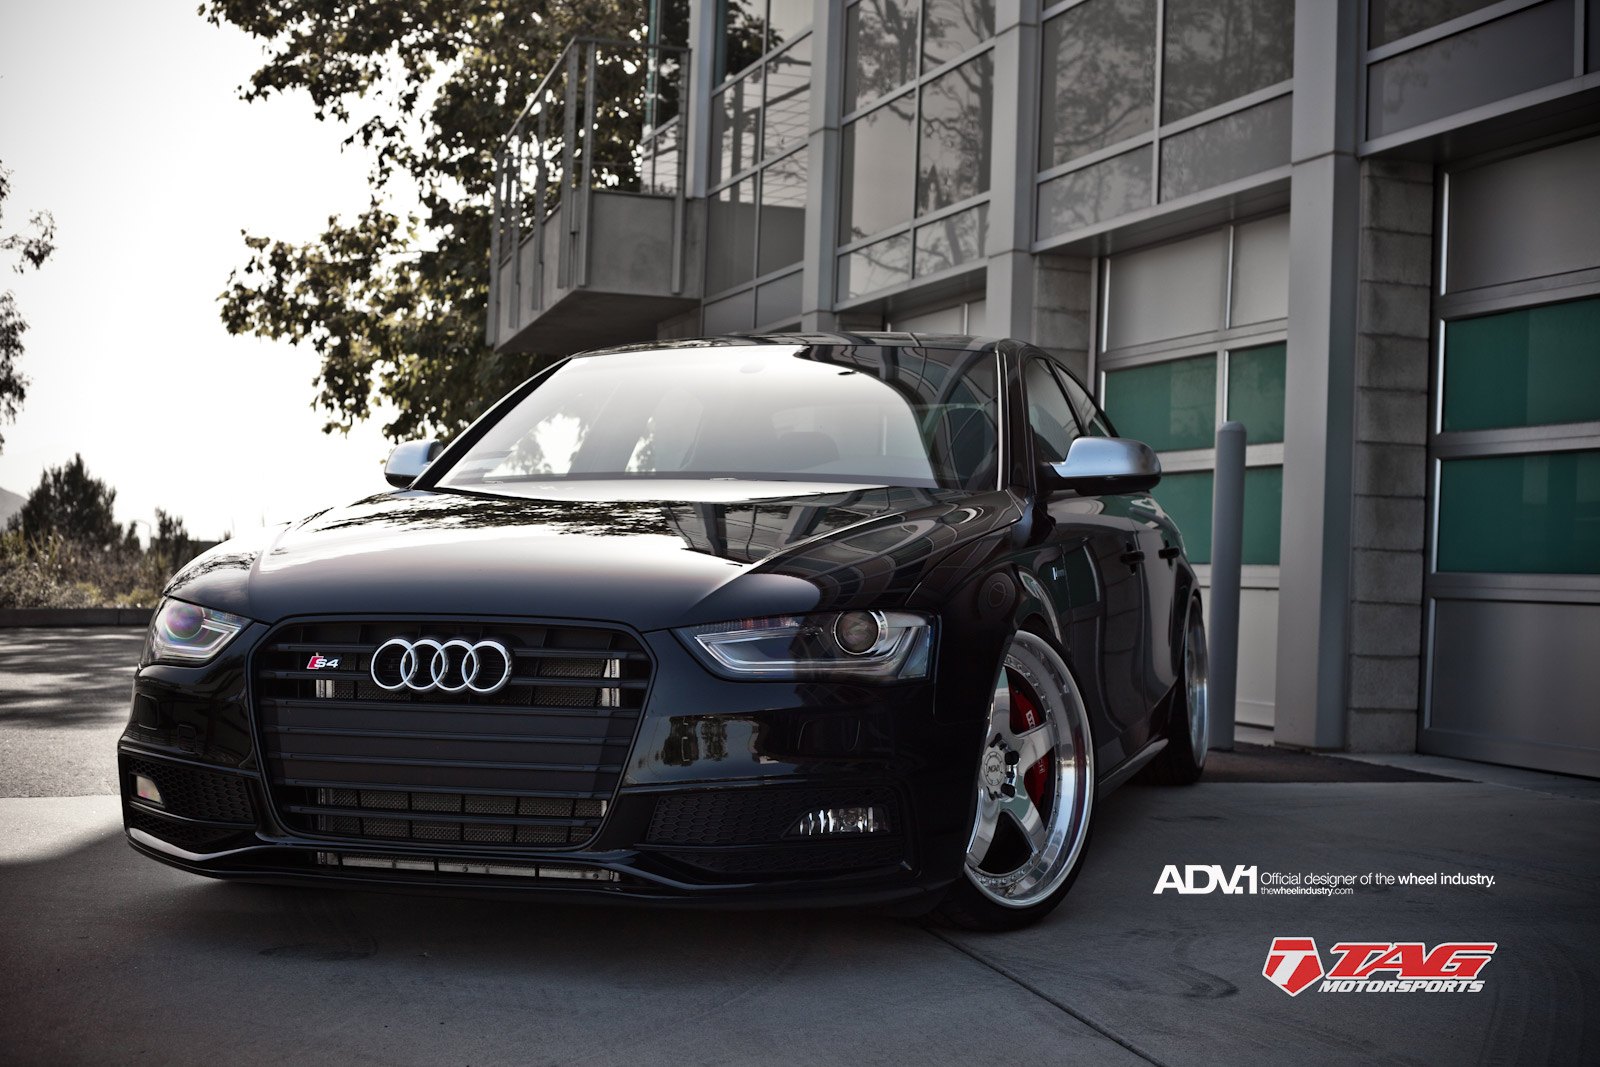 Black Audi S4 with Dark Smoke Headlights - Photo by ADV.1